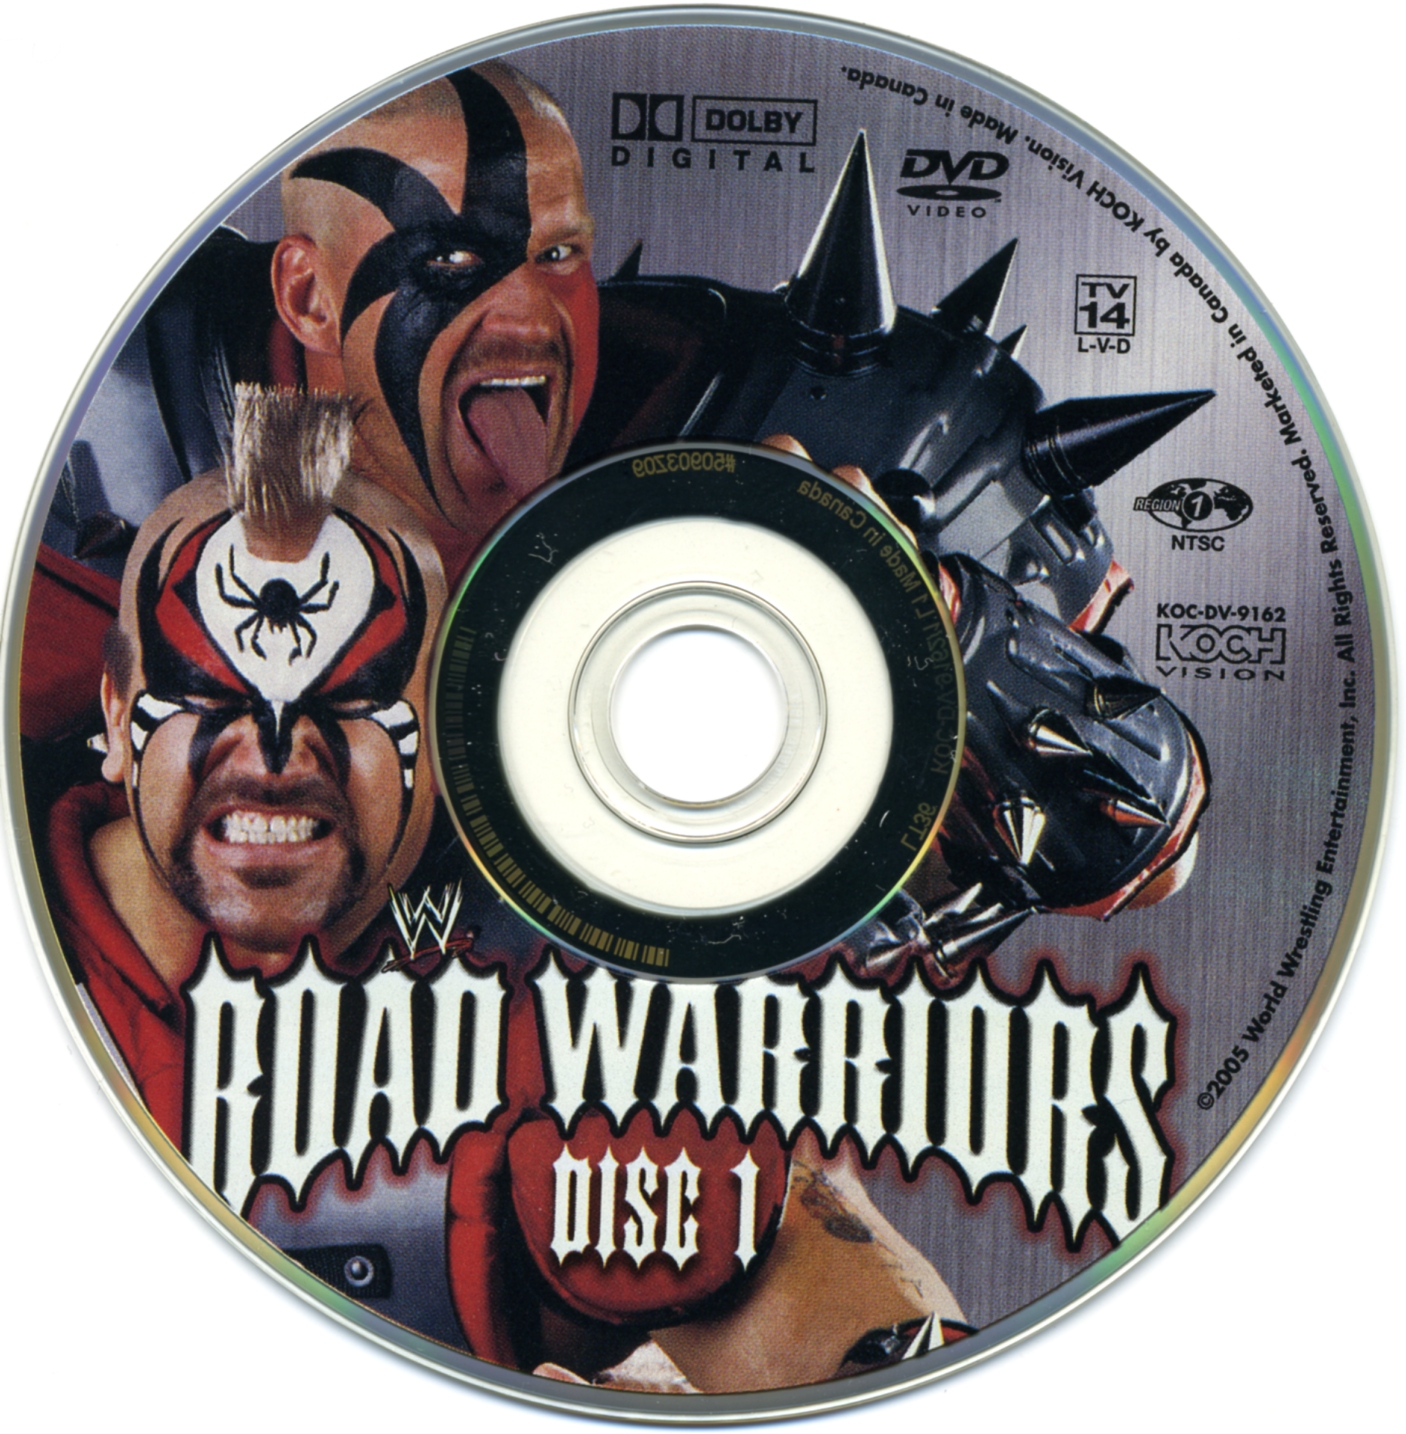 WWE Road Warriors DVD 1